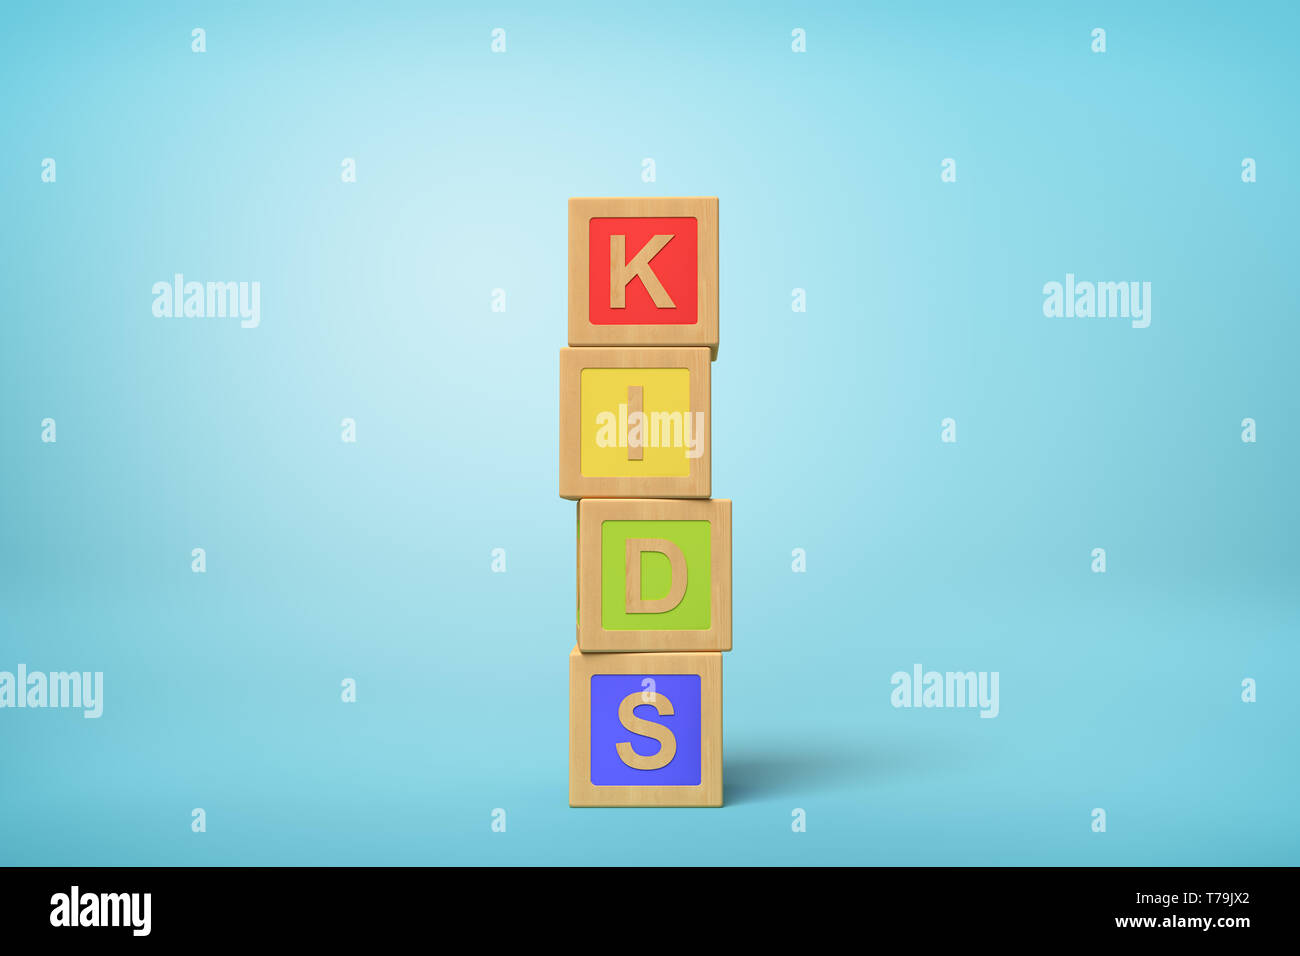 3d rendering of alphabet toy blocks on blue background. Stock Photo